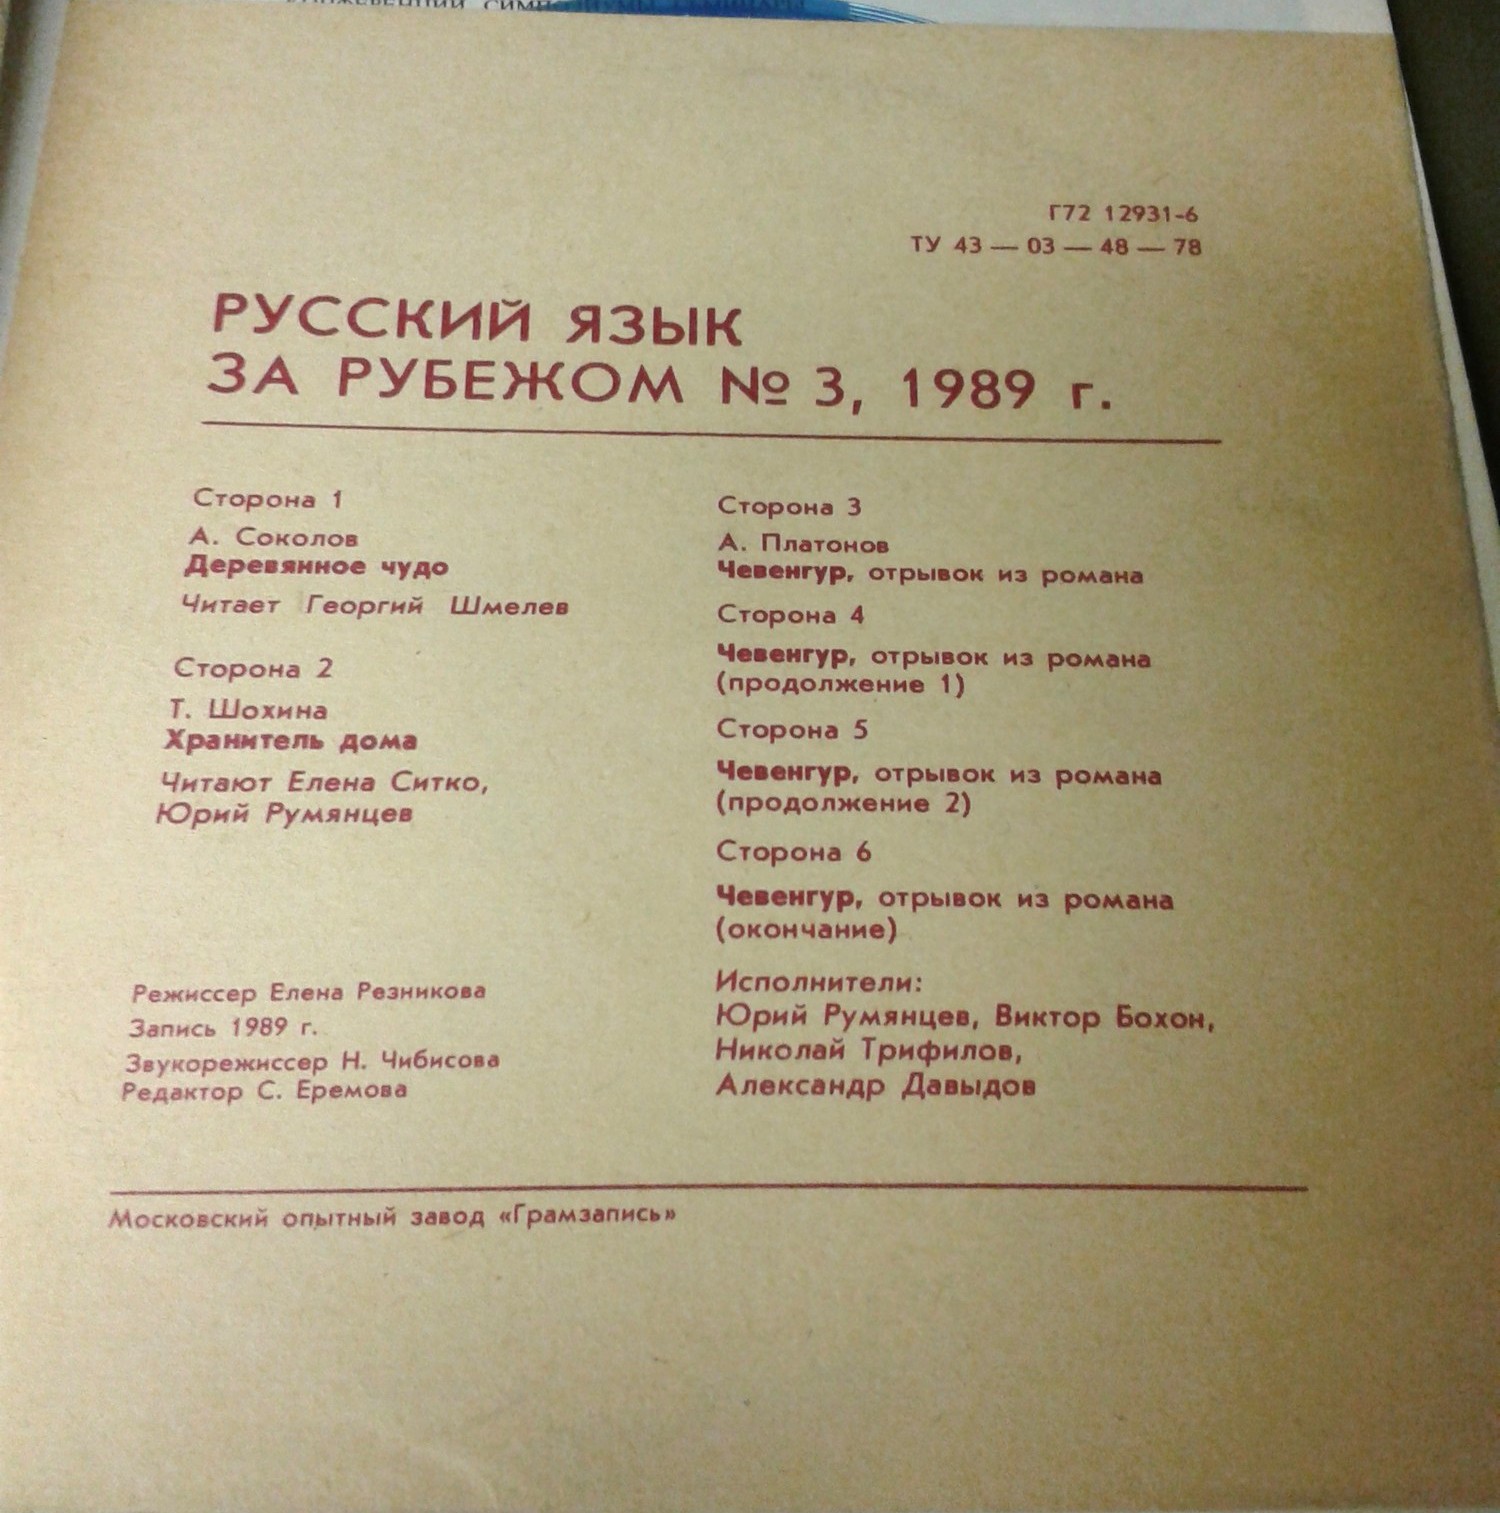 "РУССКИЙ ЯЗЫК ЗА РУБЕЖОМ", № 3 - 1989